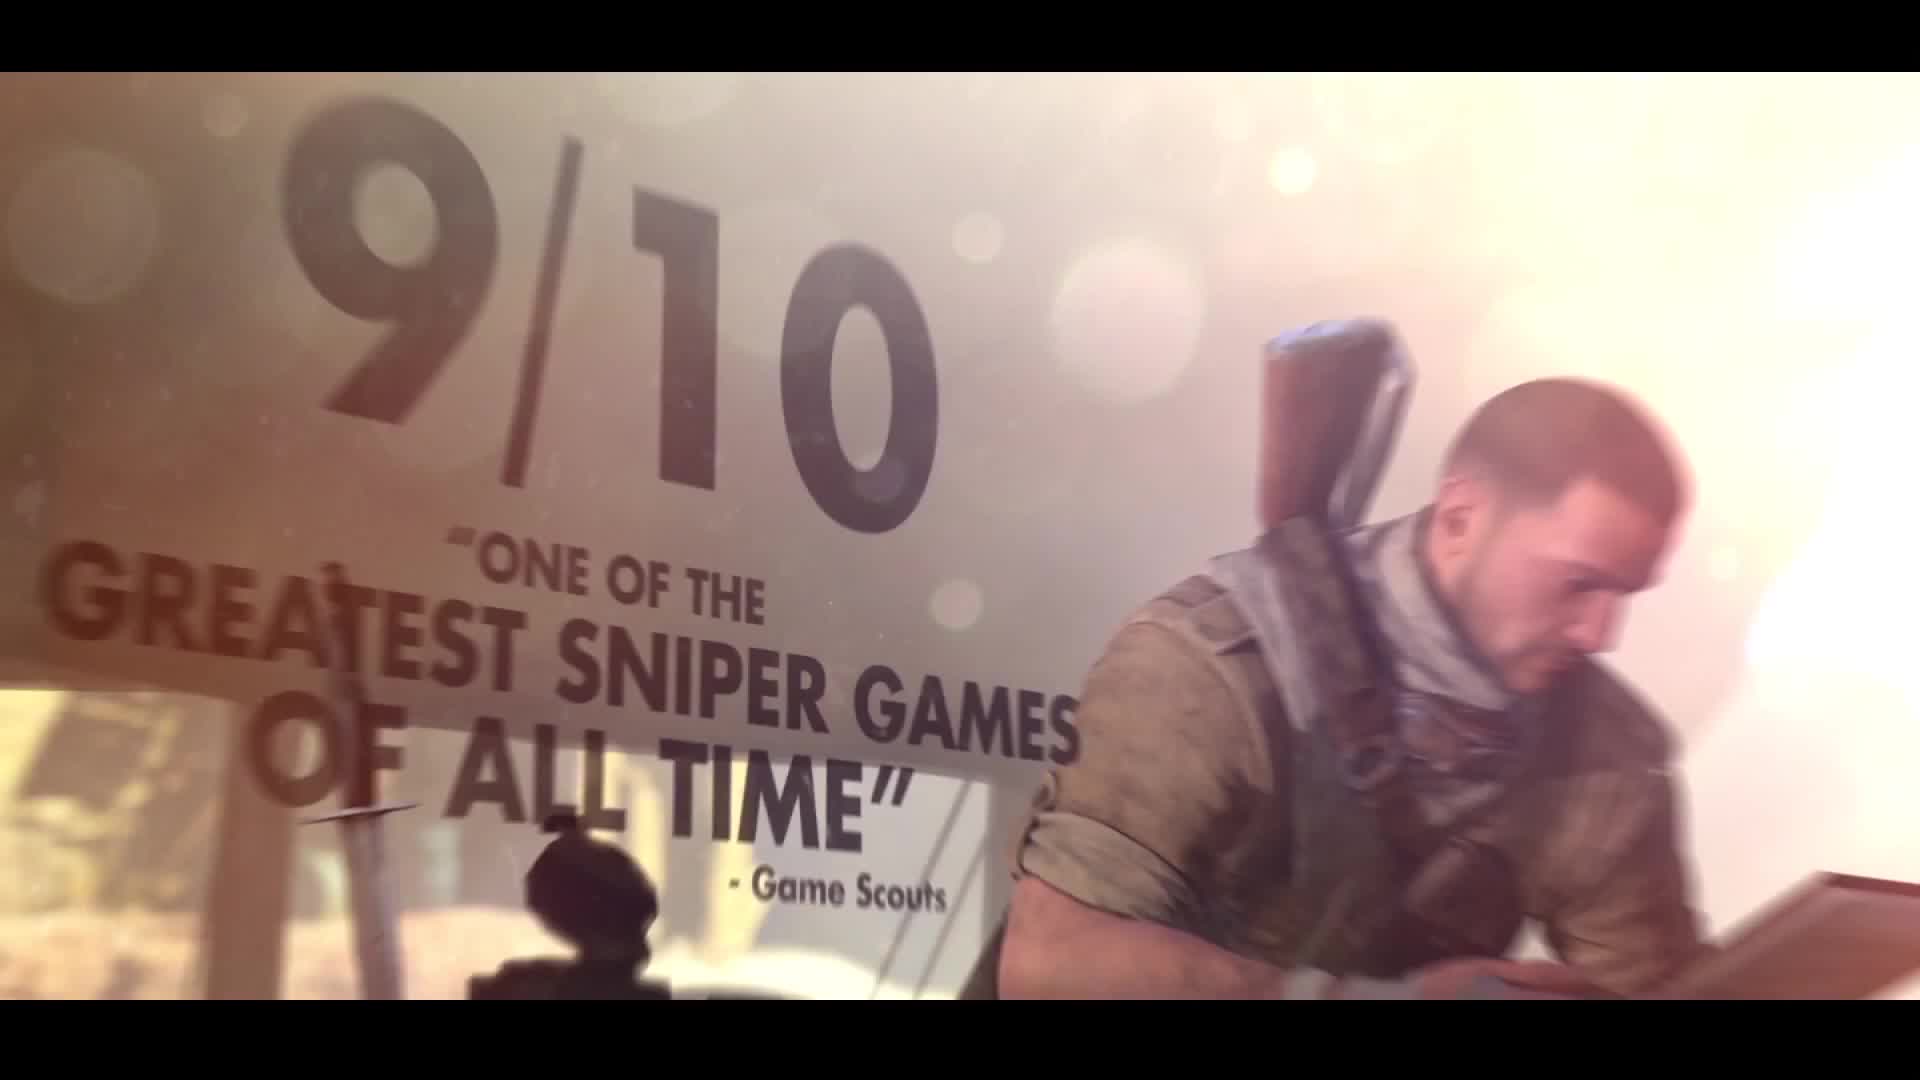 Sniper Elite 3 - Ultimate edition